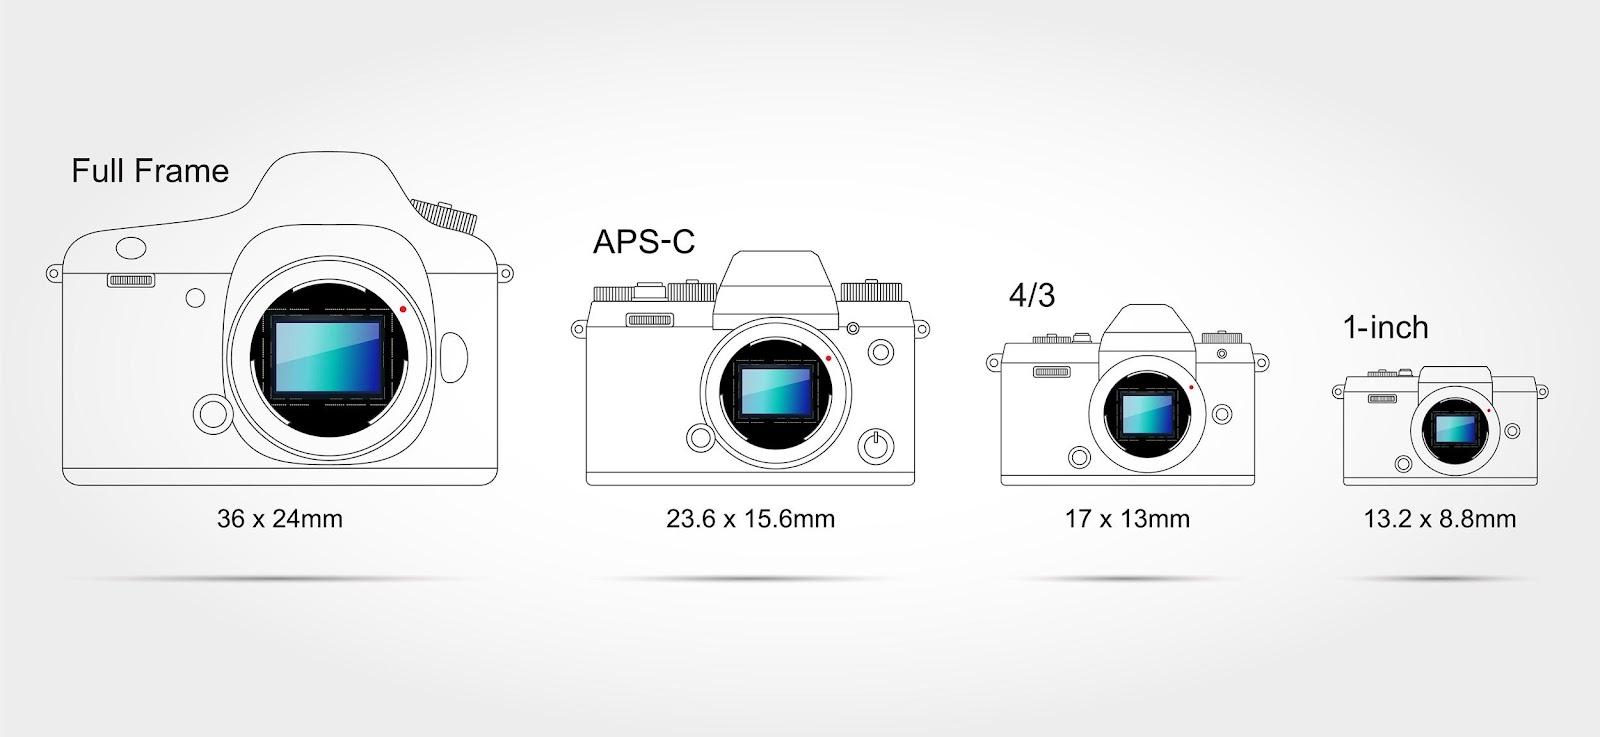 dslr camera sensor size comparison